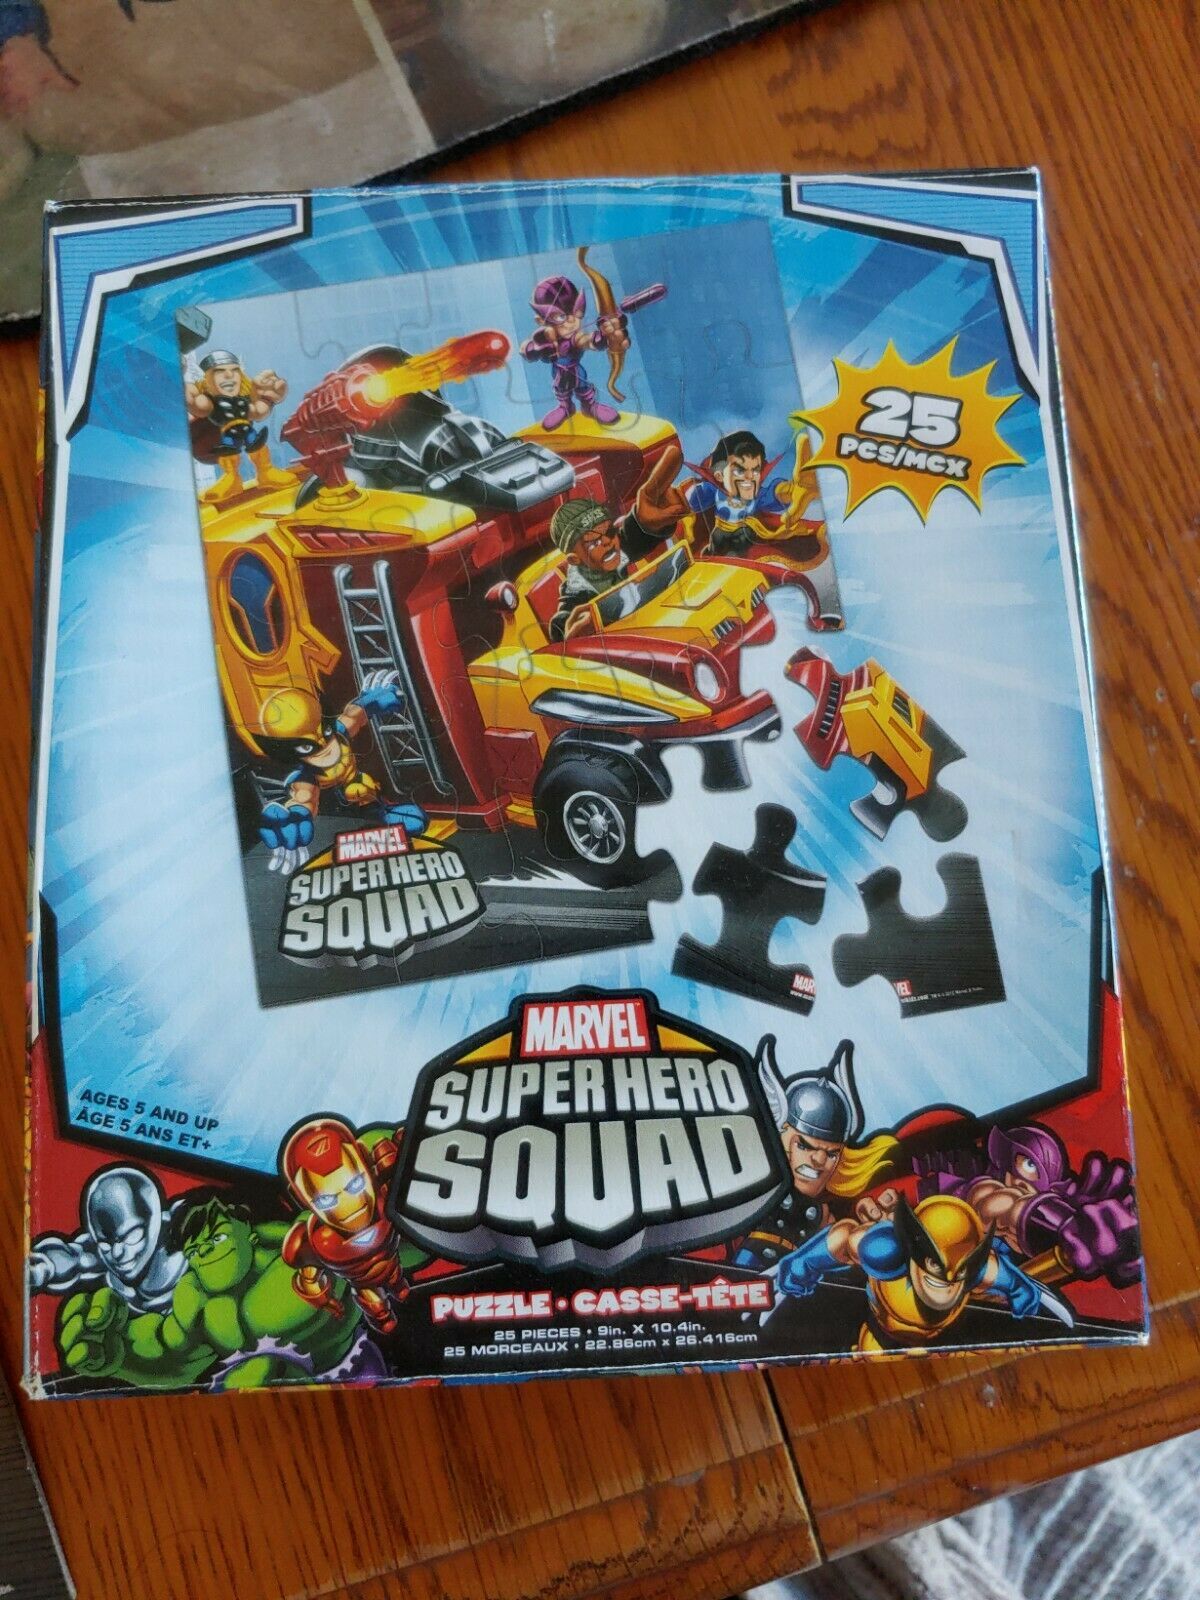 Marvel Super Hero Adventures 25 Piece Foam Puzzle Brand New In Box 